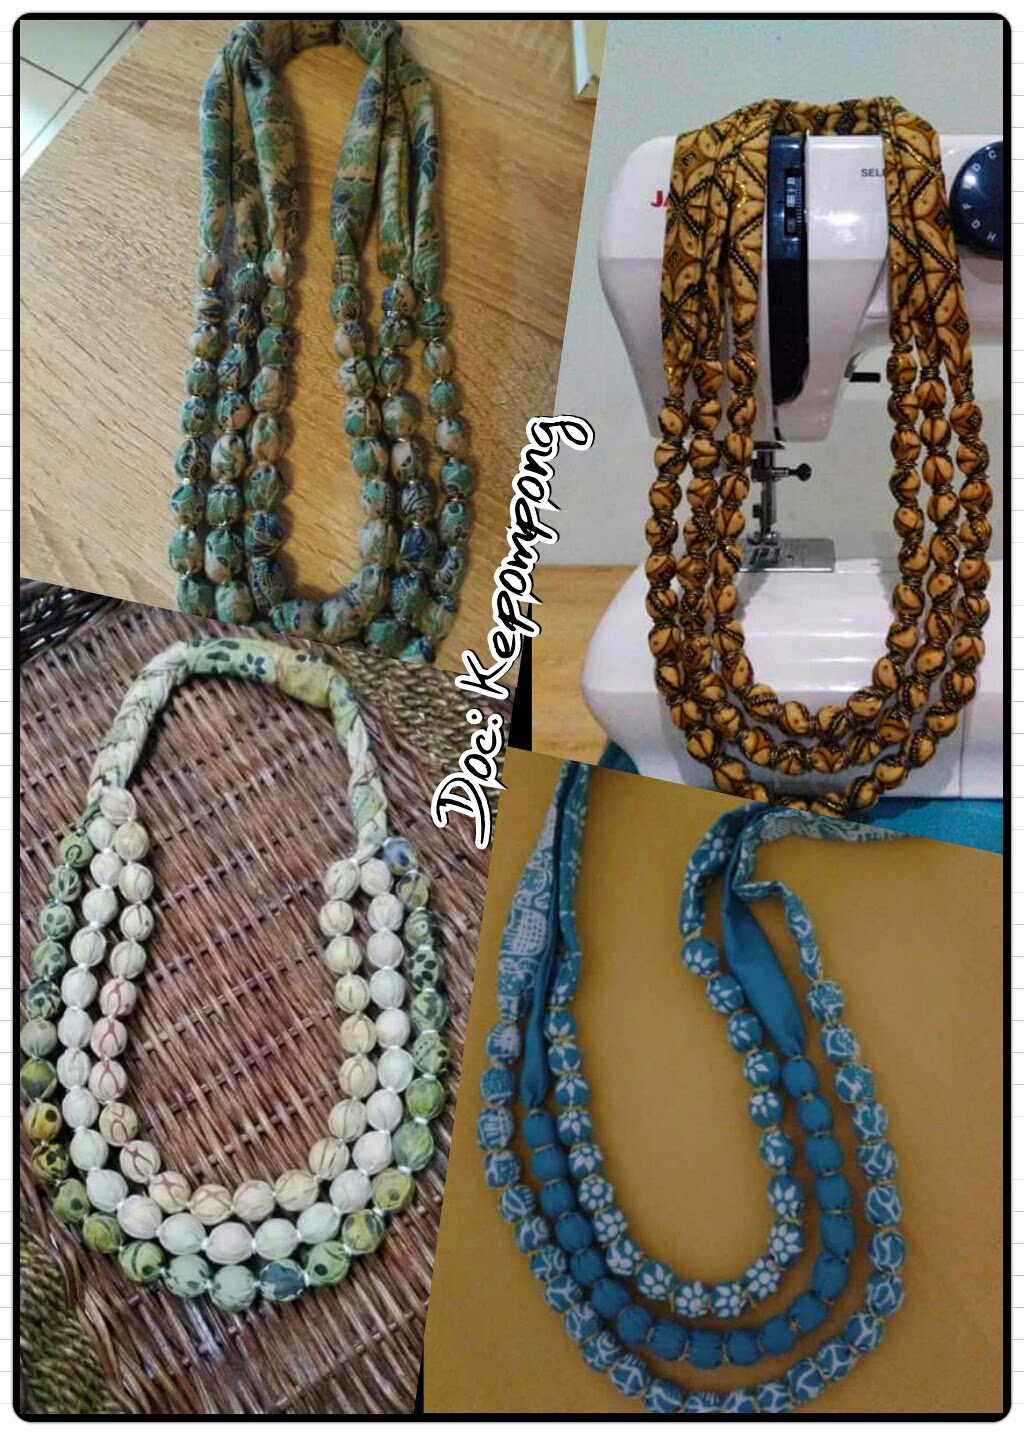 Chirarae s Crafting Kalung Batik  Handmade